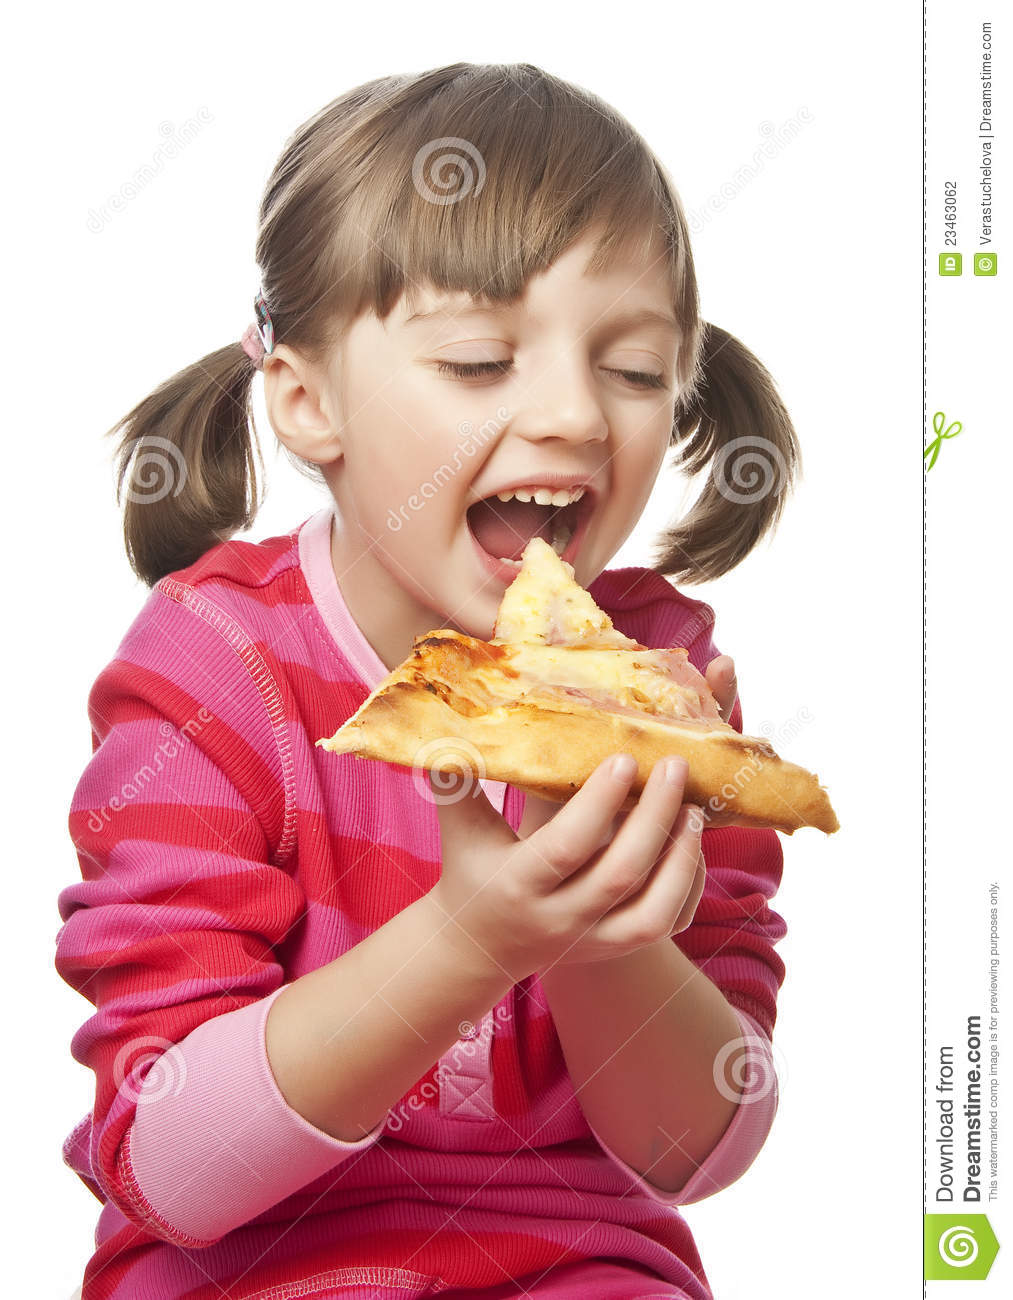 Happy Little Girl Eating Pizza Stock Photography   Image  23463062